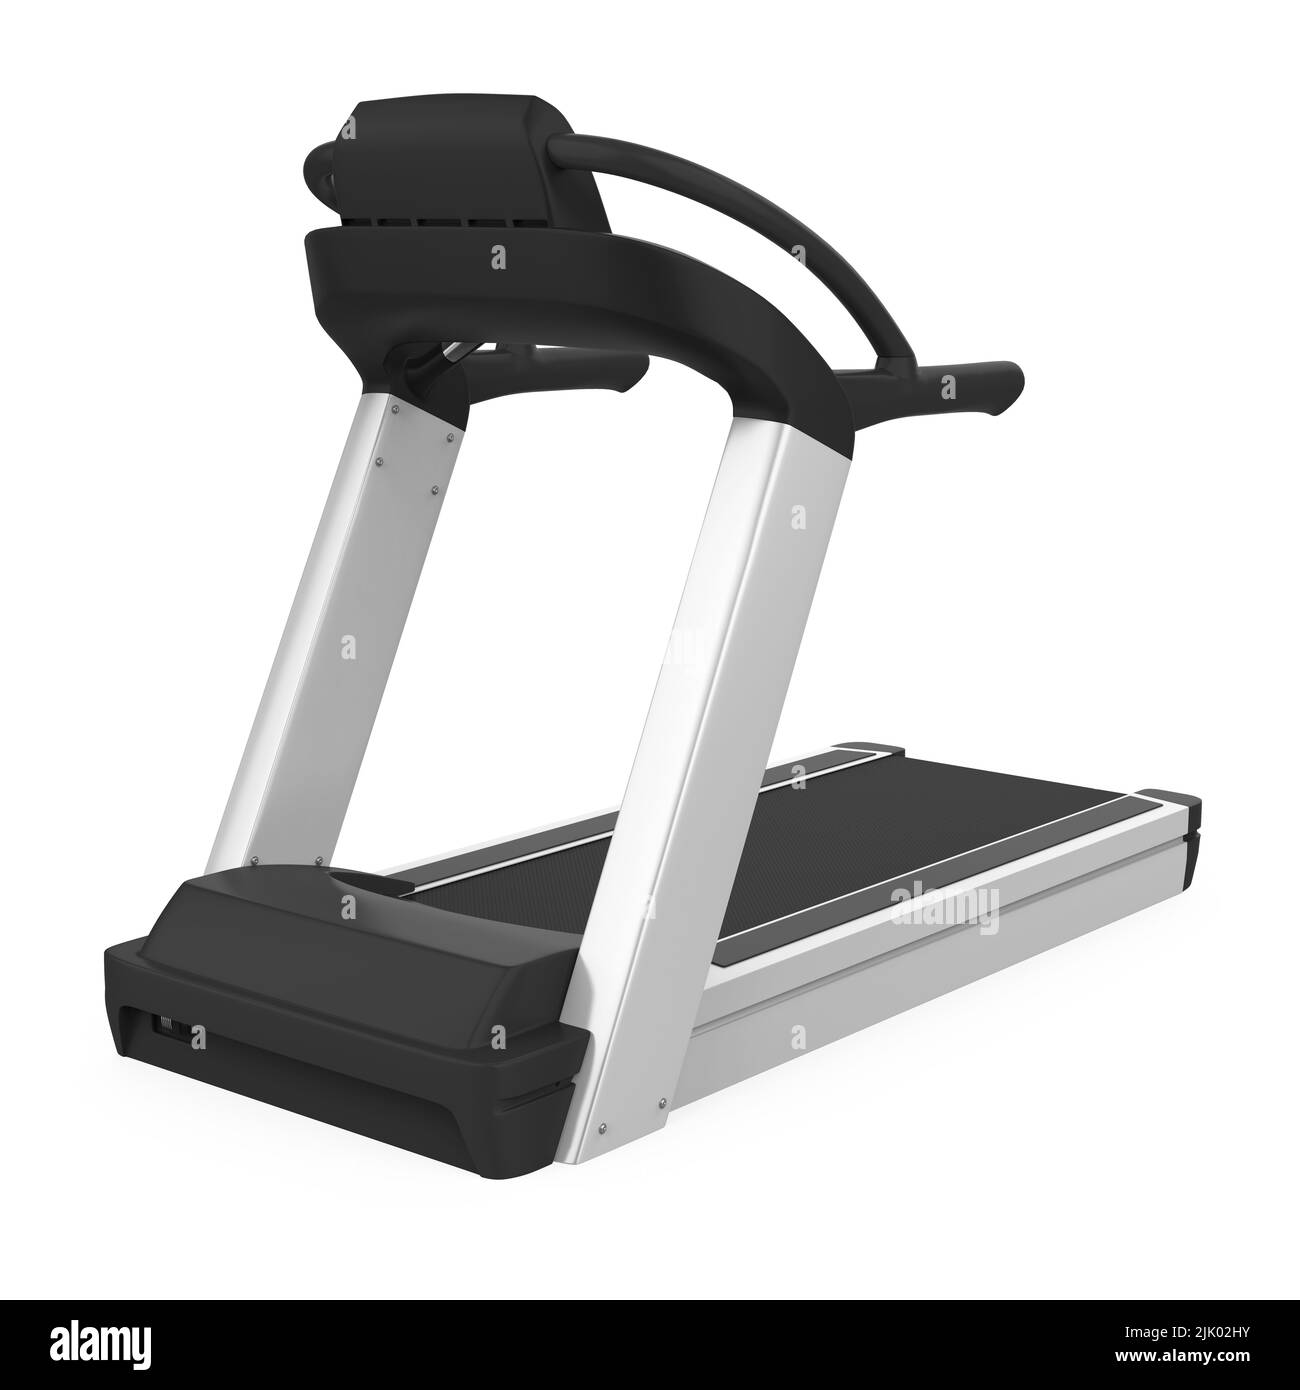 Treadmill isolated on white background Stock Photo